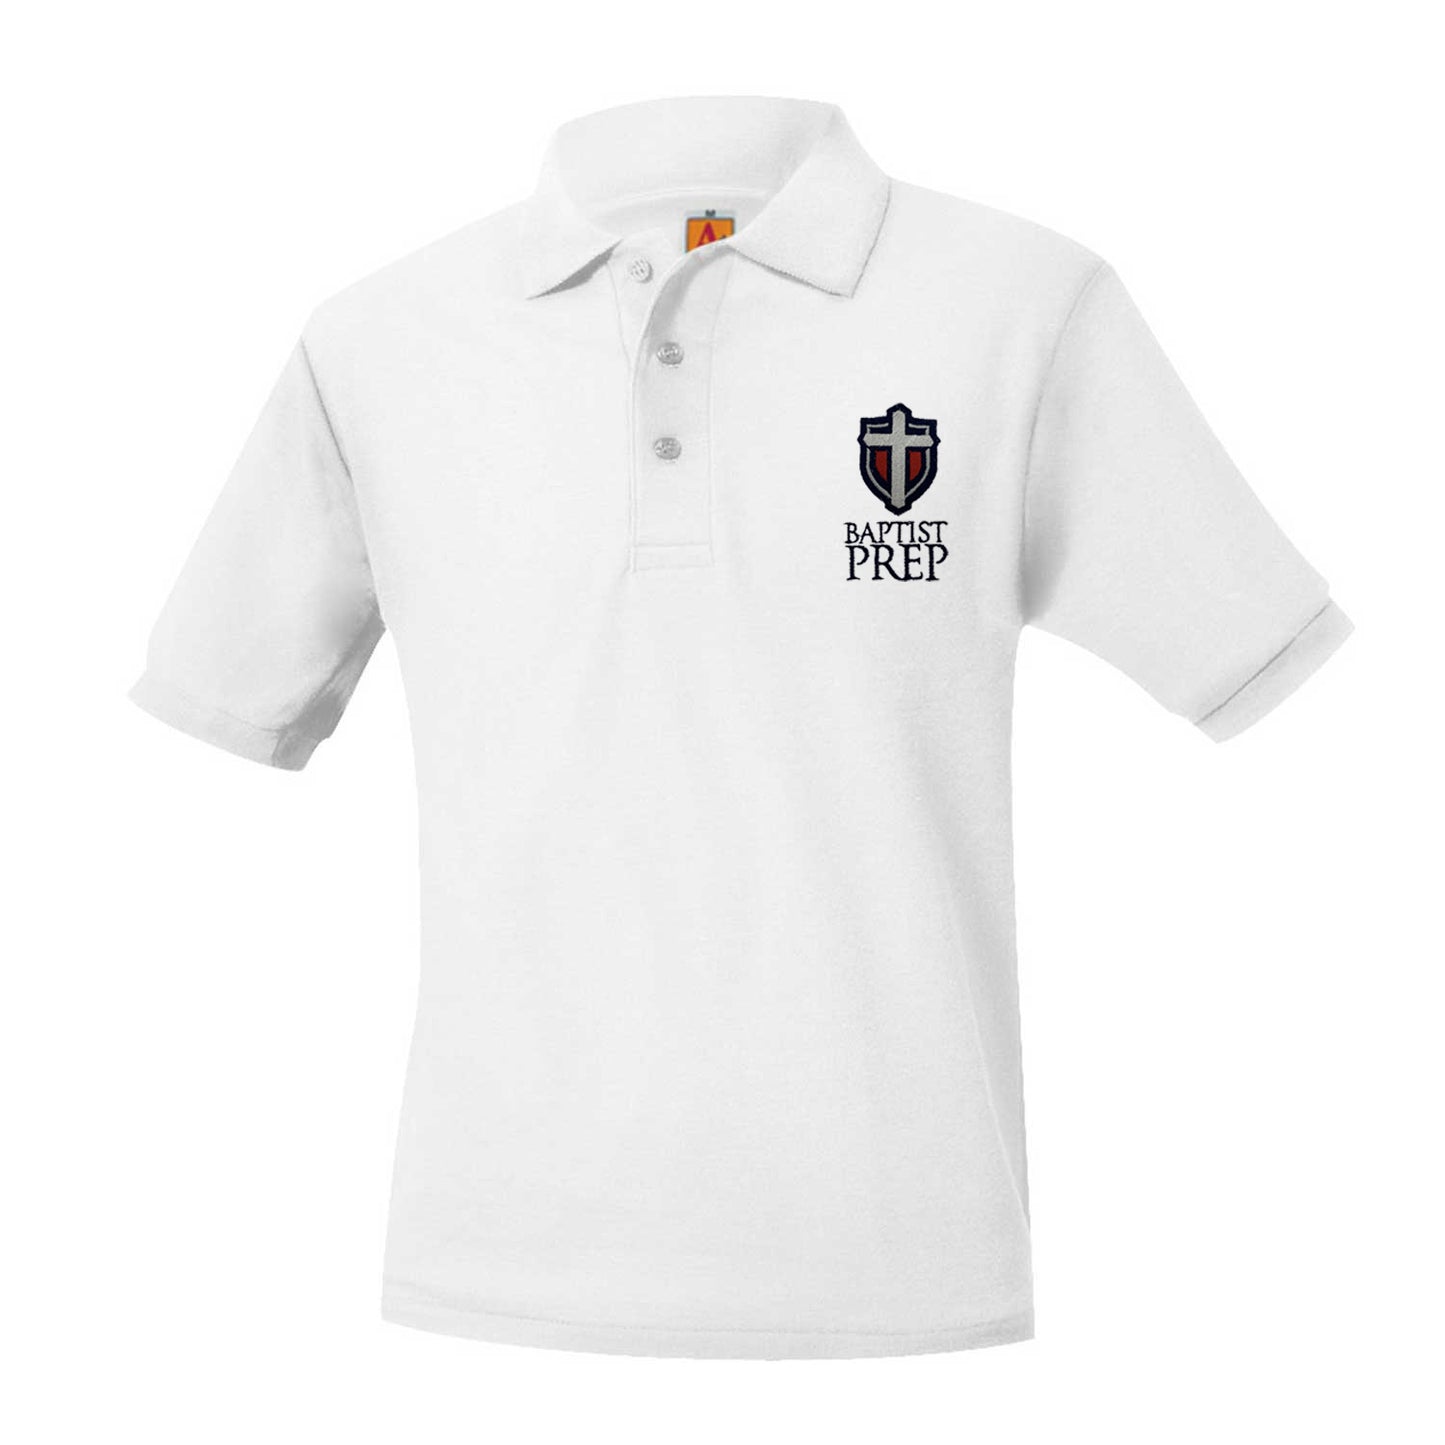 Youth Short Sleeve Pique Polo With Baptist Prep Logo